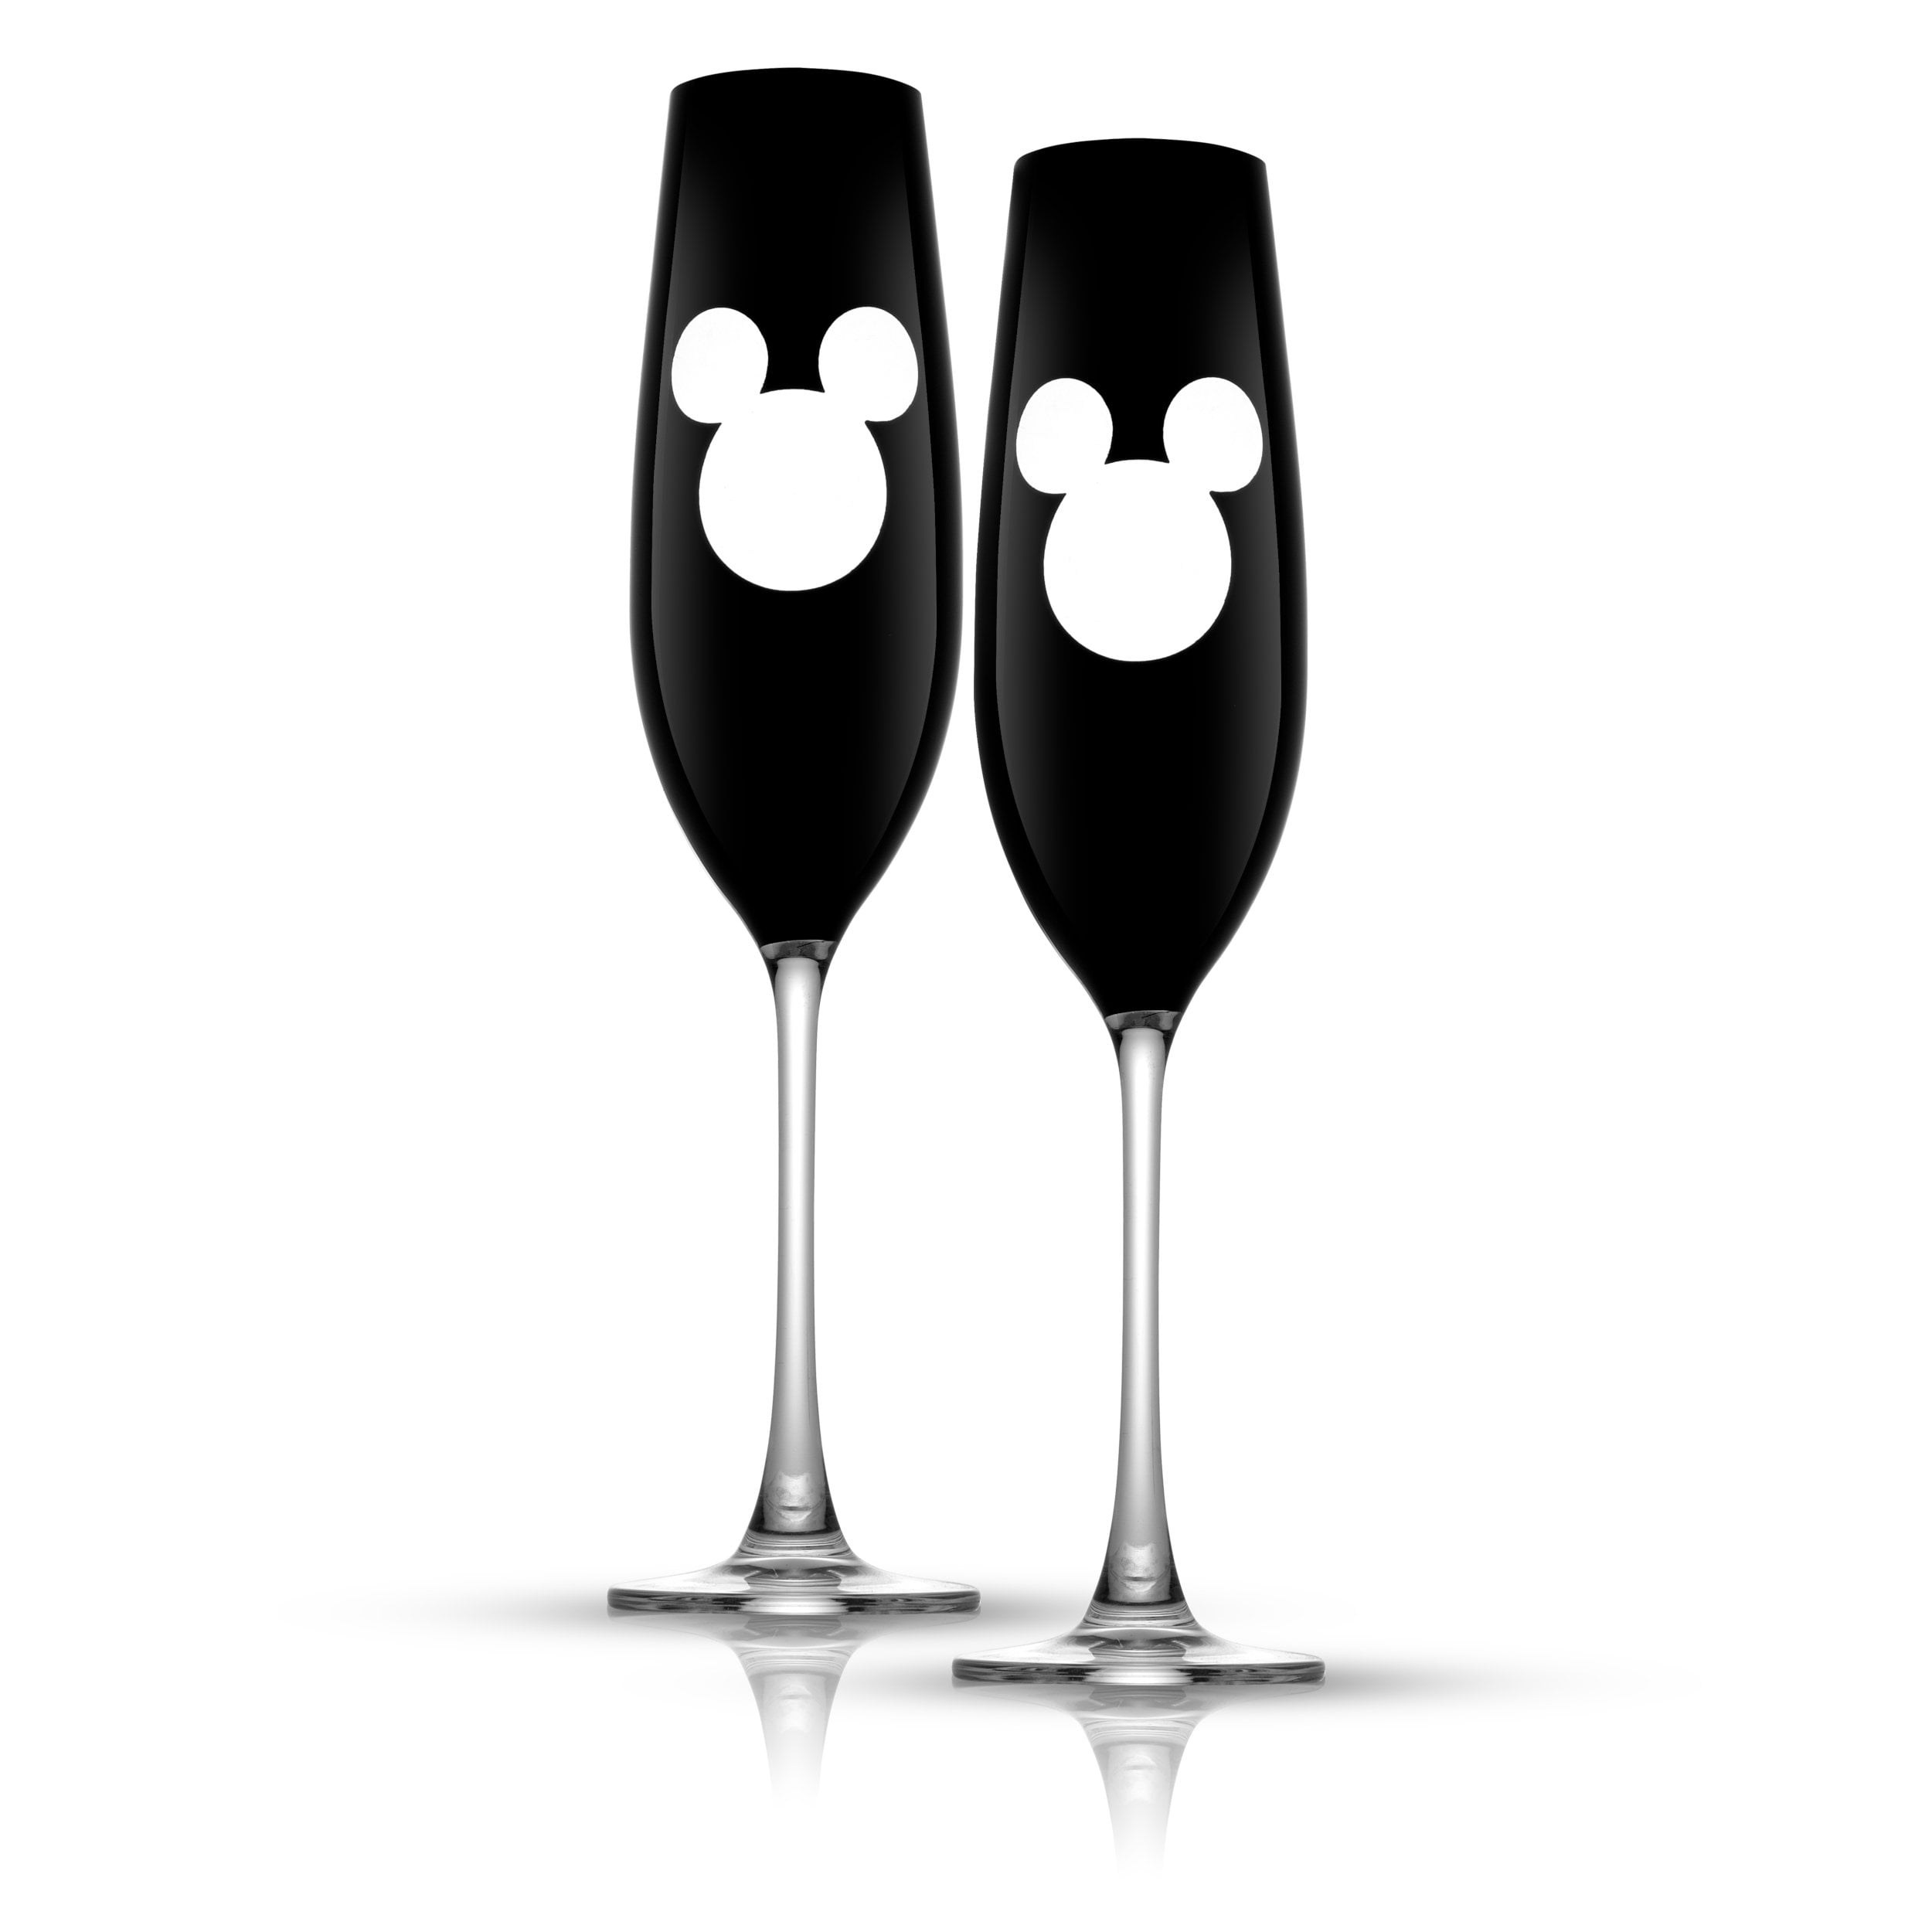 Disney Mickey & Minnie Mouse Christmas Glassware Set 9oz